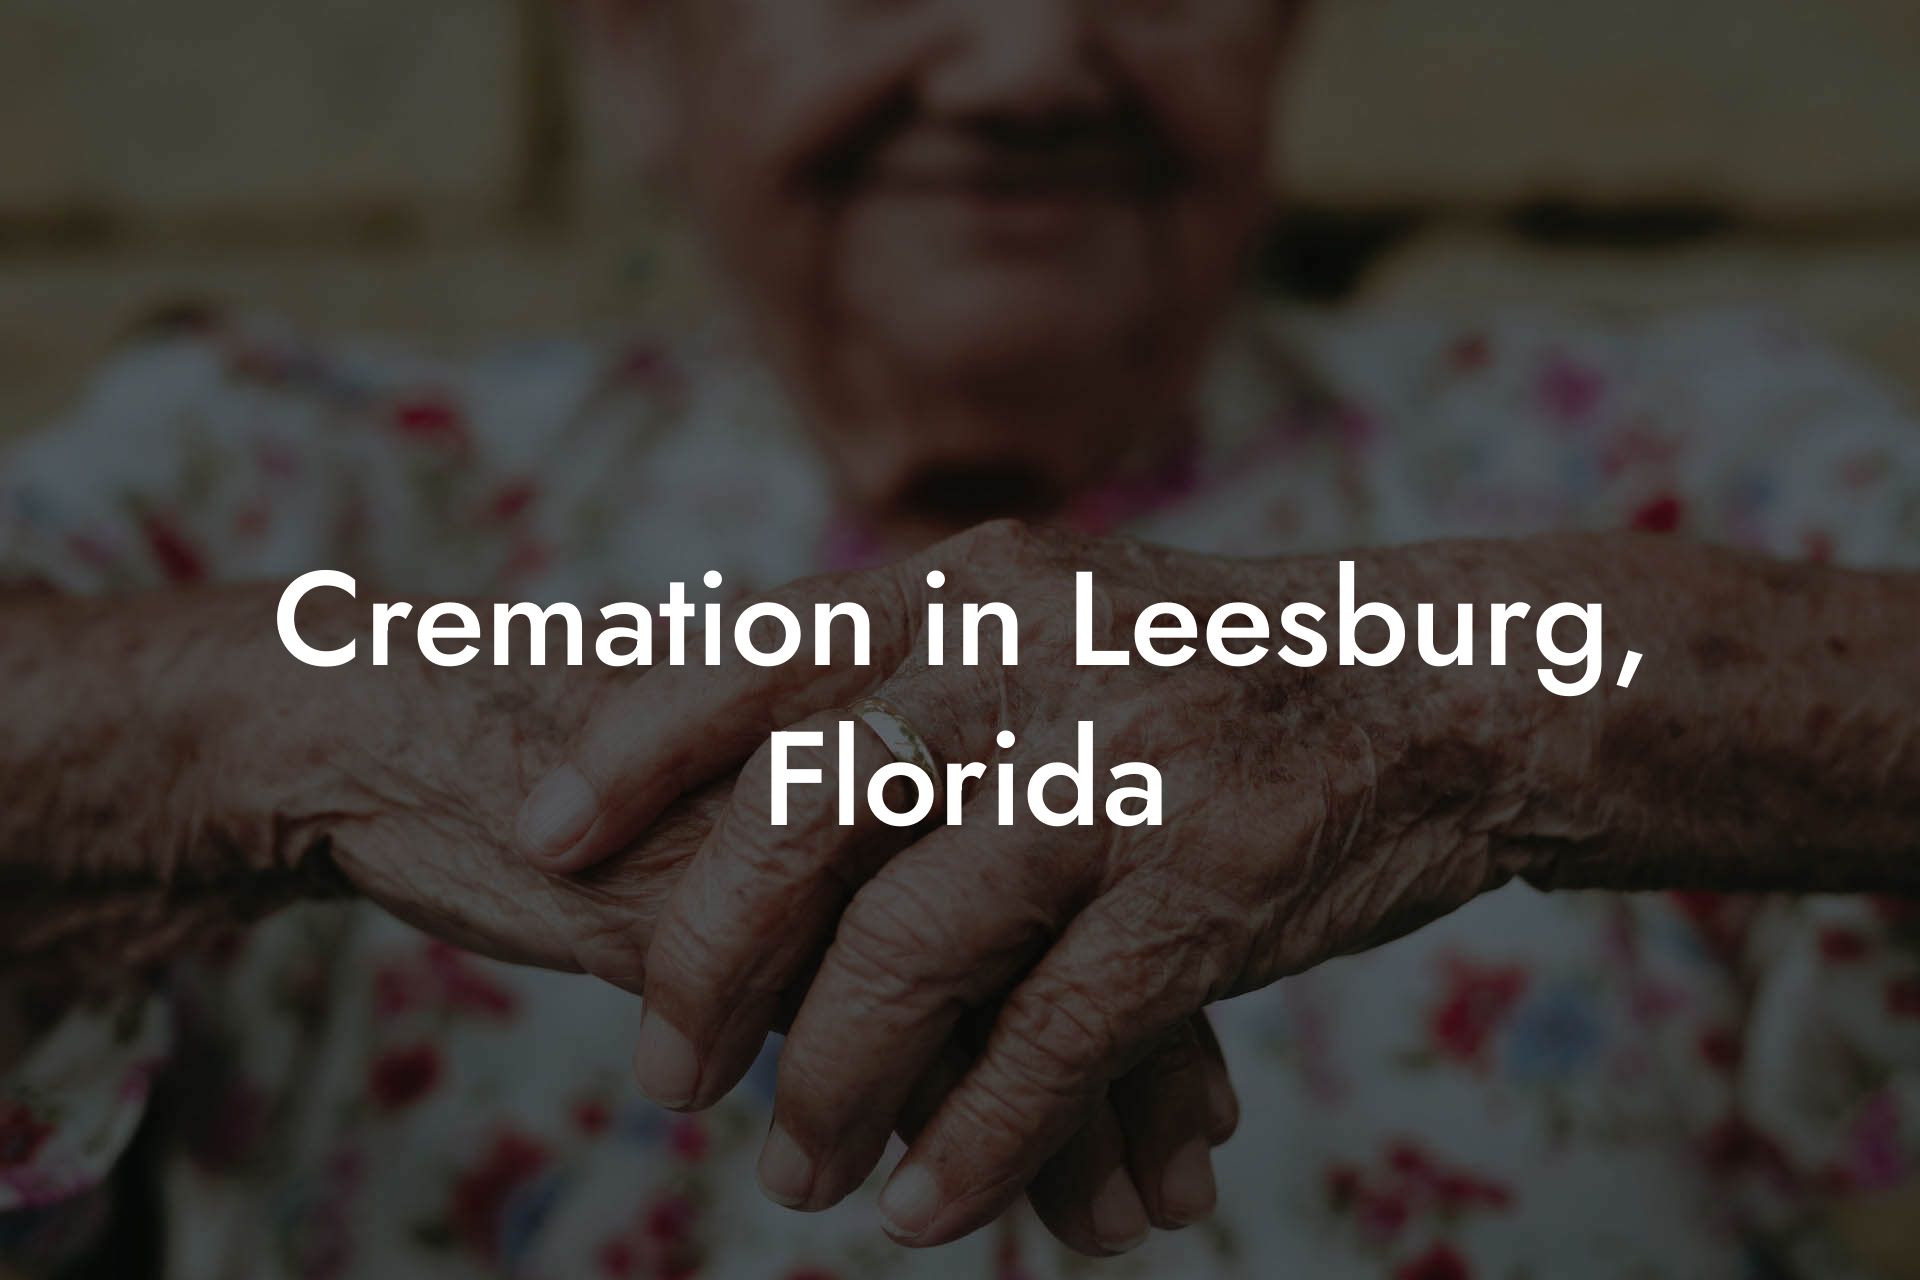 Cremation in Leesburg, Florida